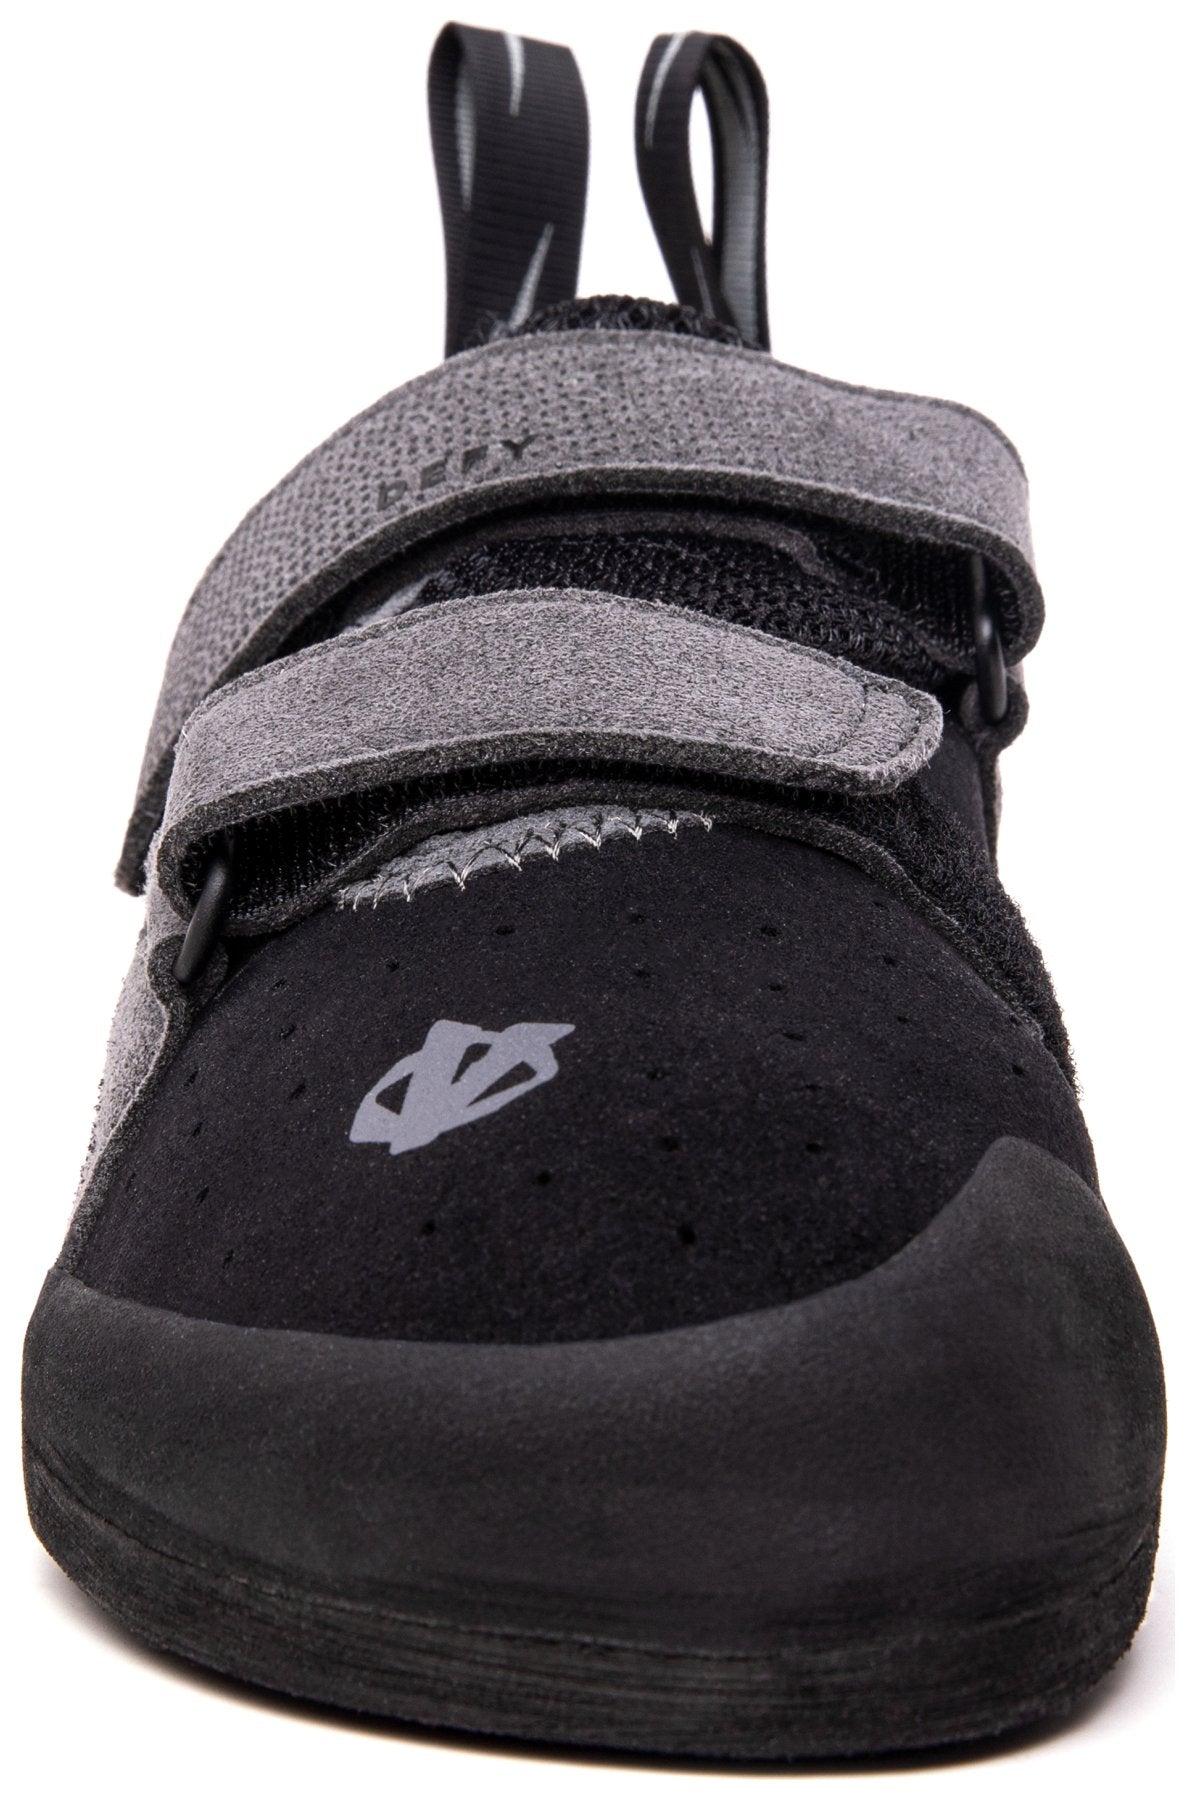 Defy - grey-black, men's climbing shoes